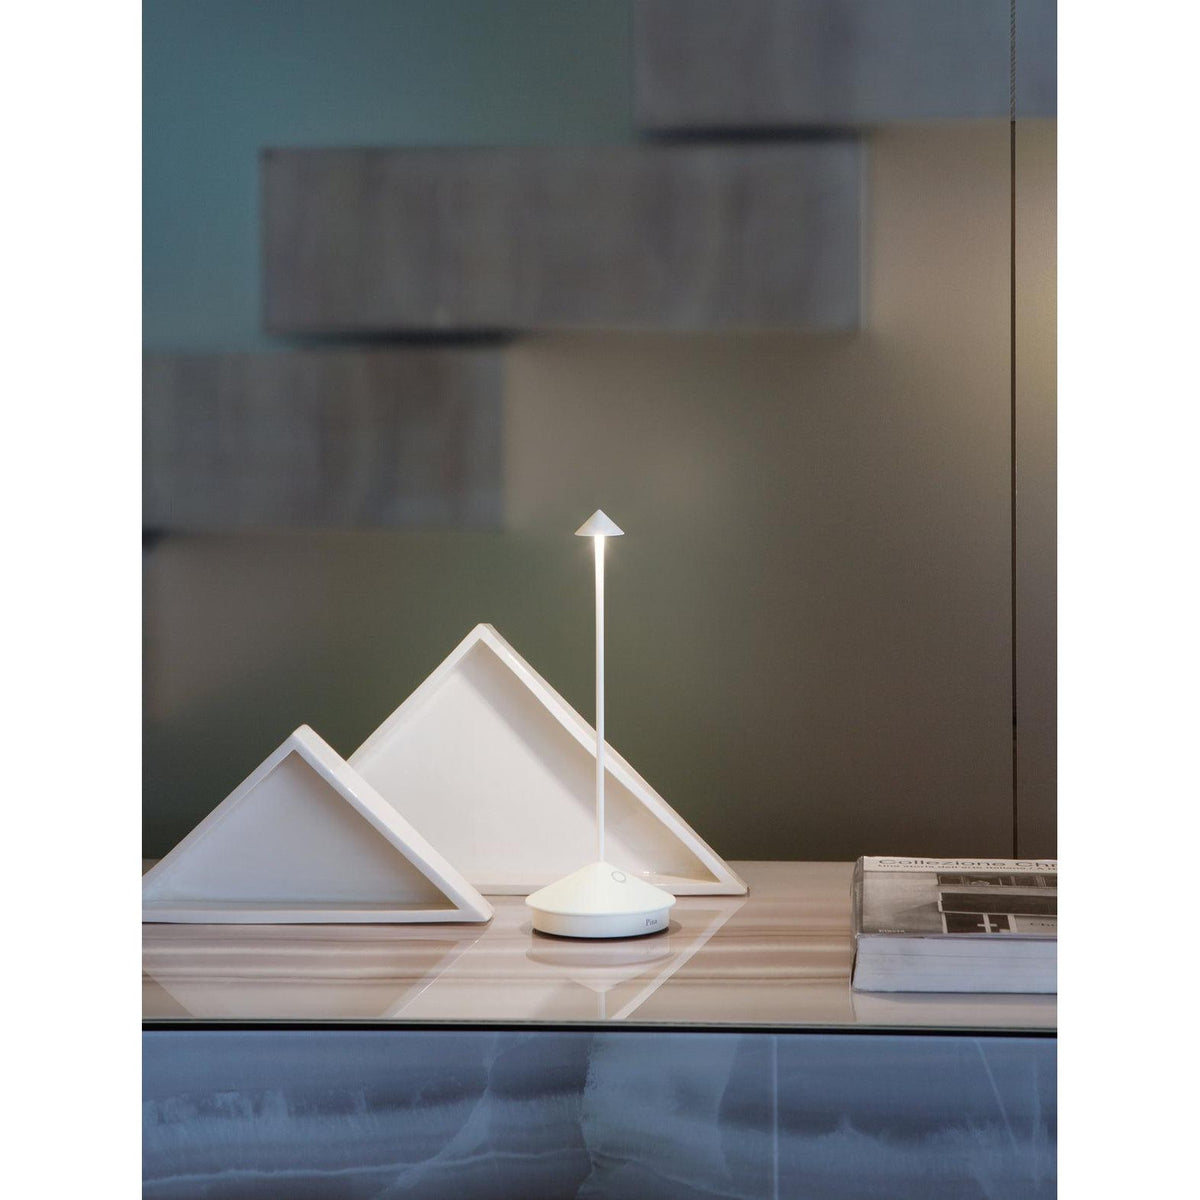 Pina Pro Table Lamp